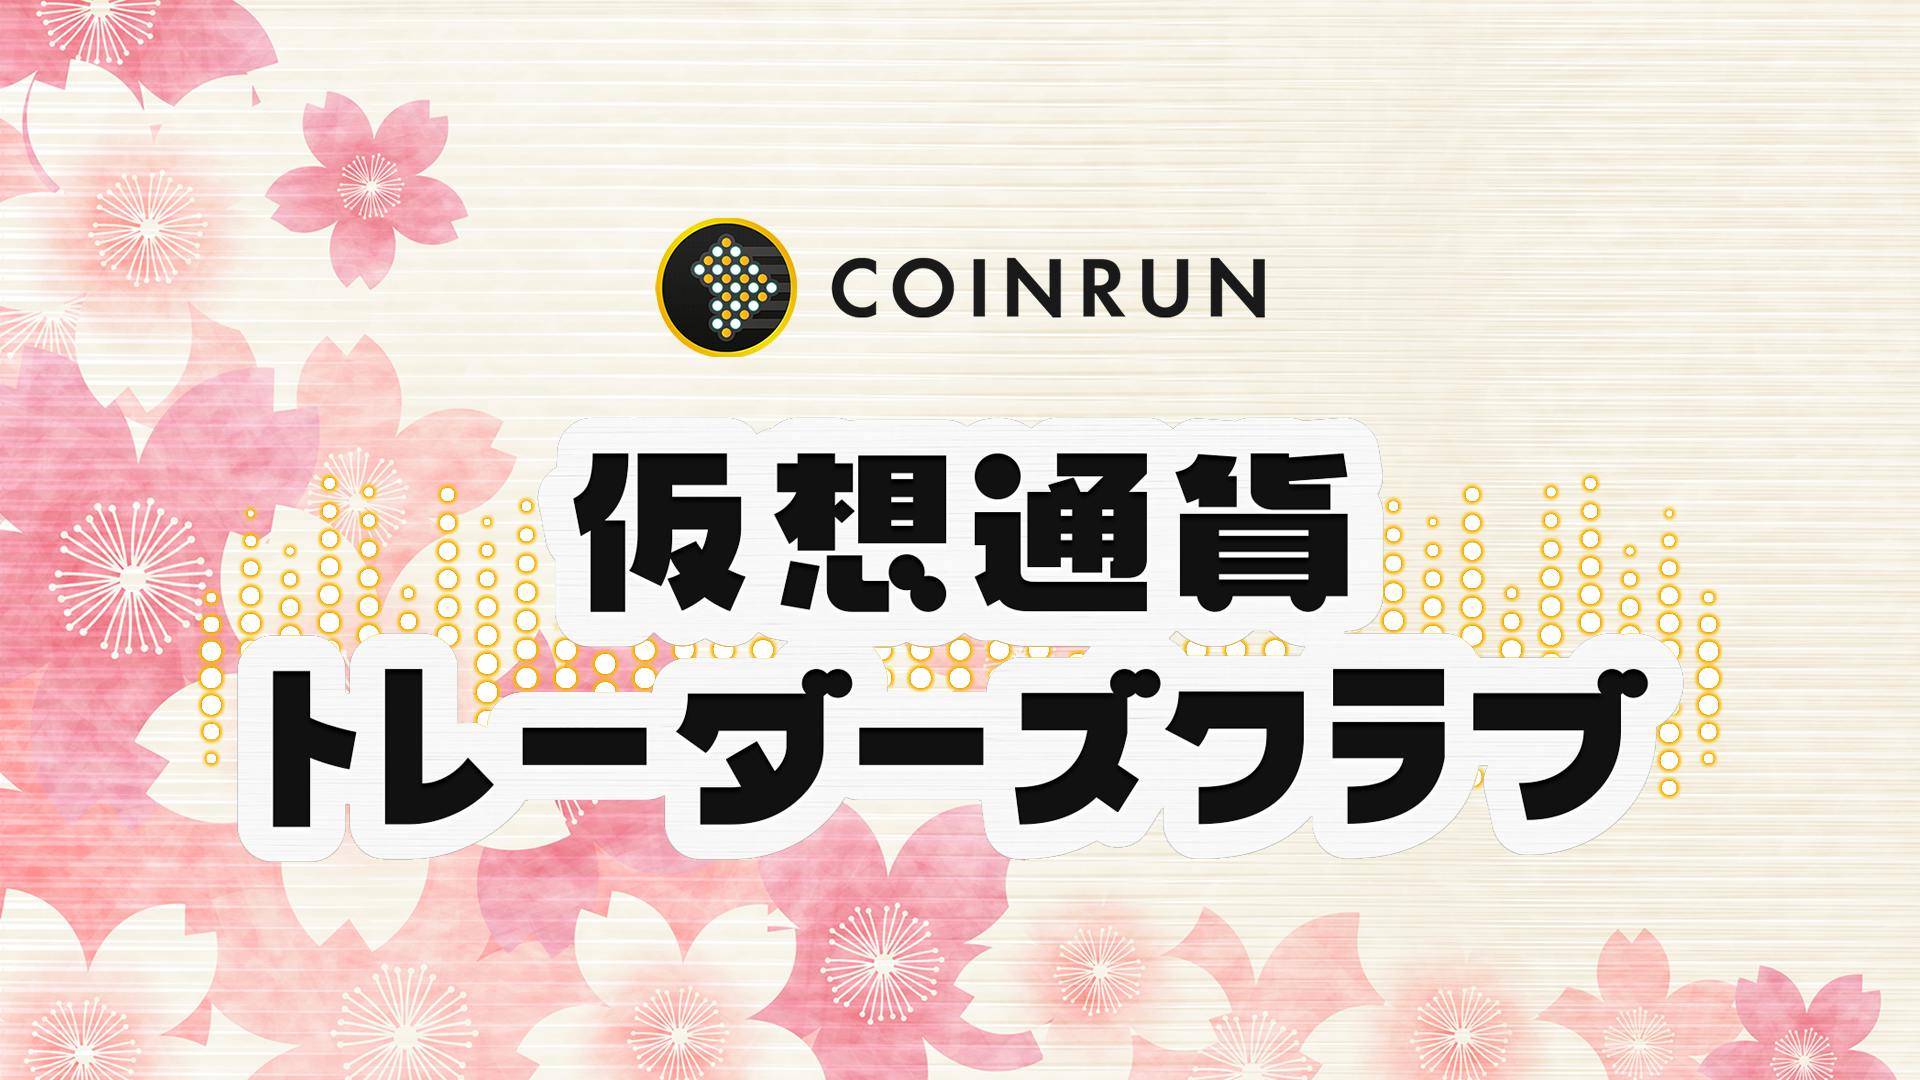 COINRUN - 仮想通貨トレーダーズクラブ COINRUN - DMM オンラインサロン